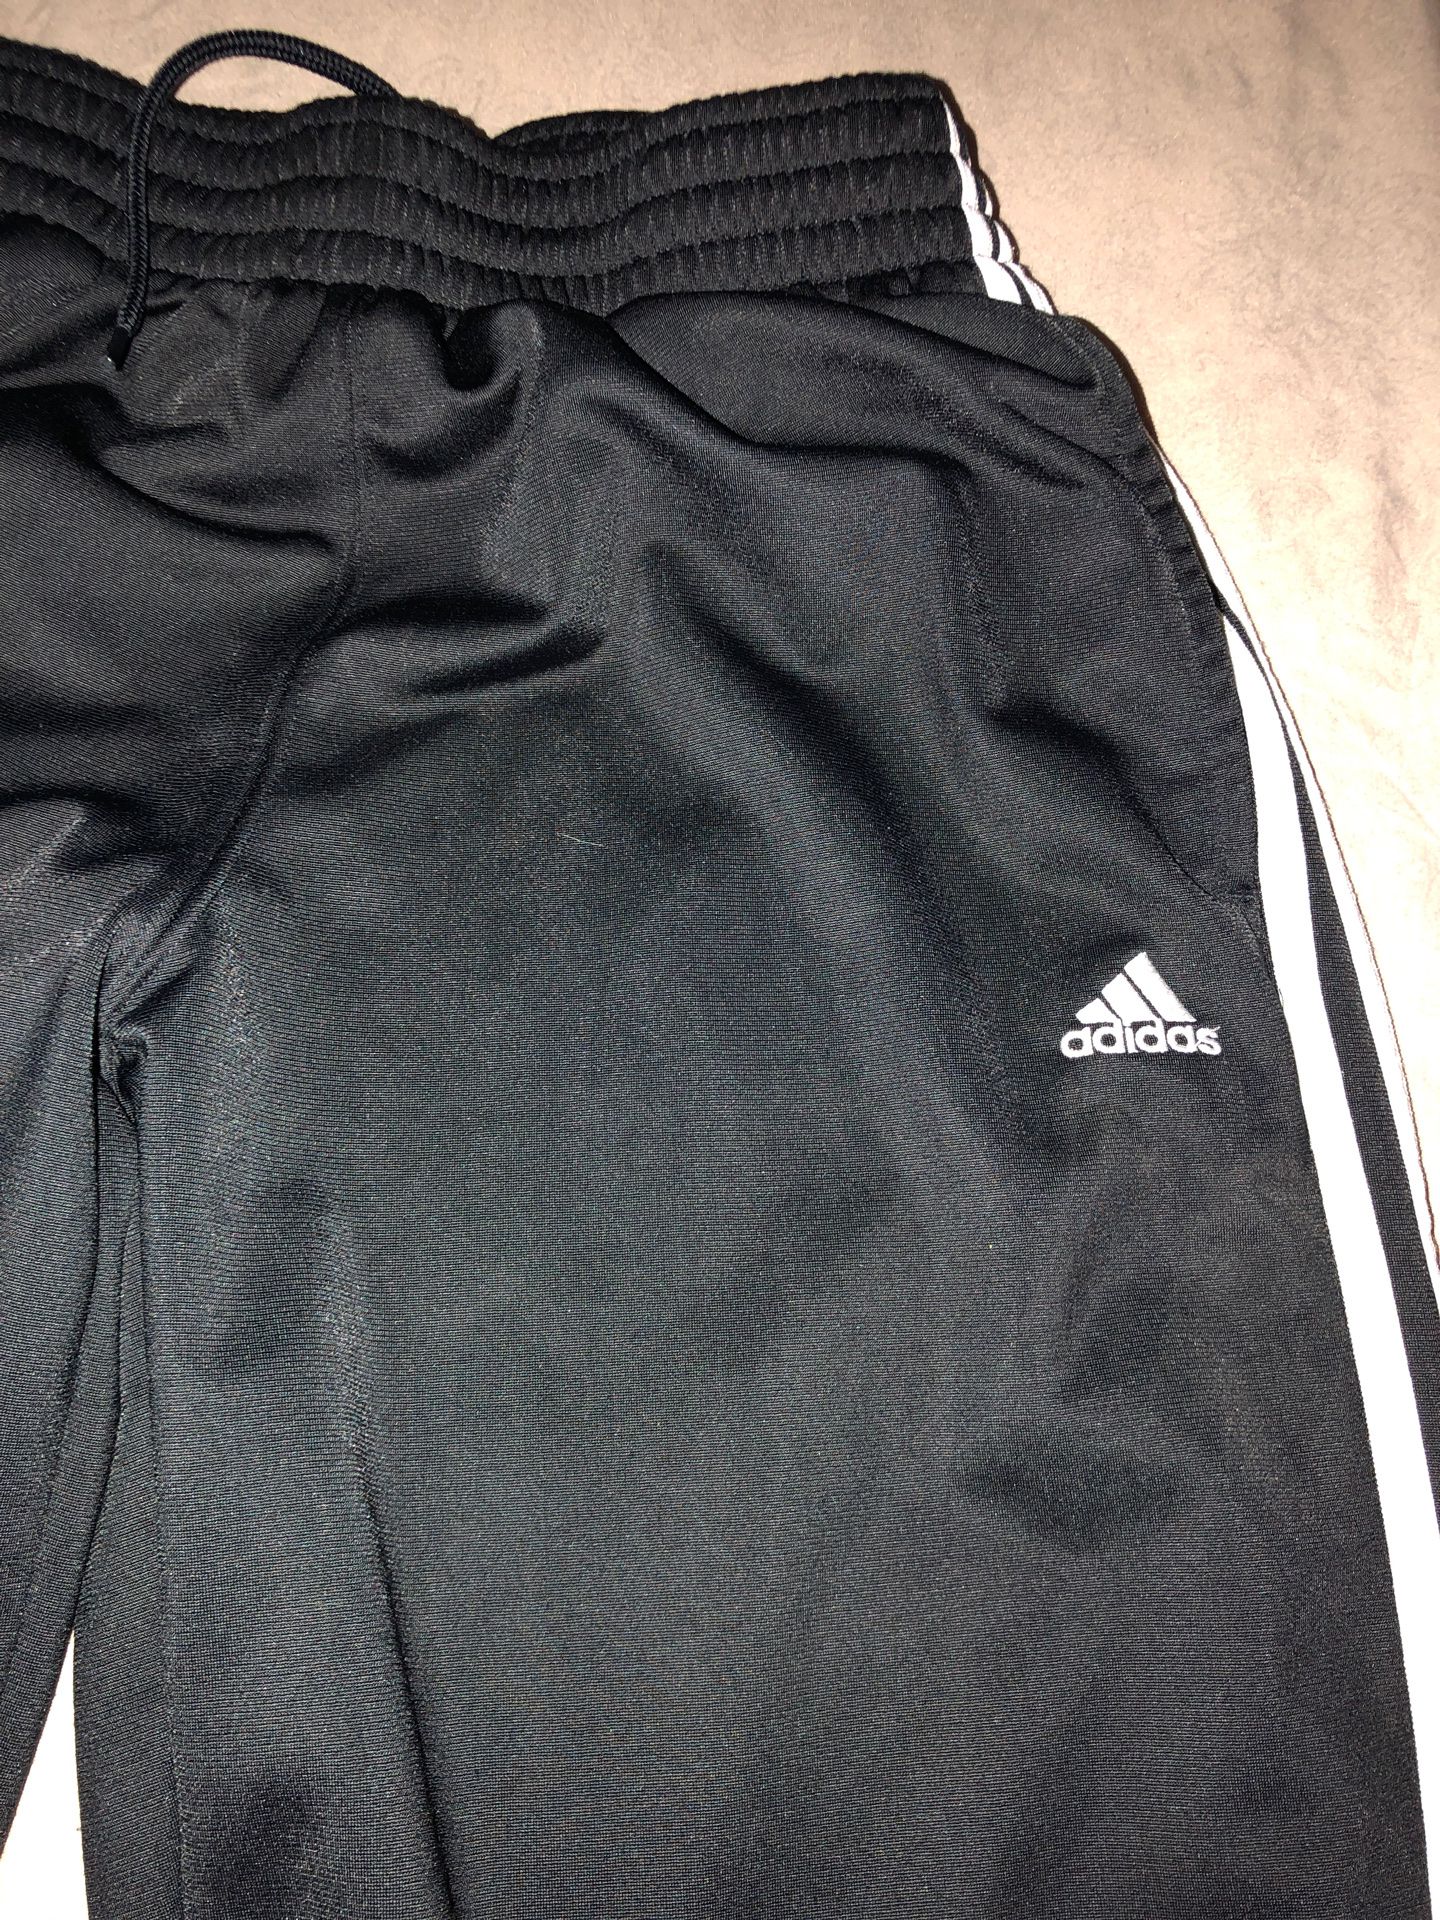 Adidas sweats